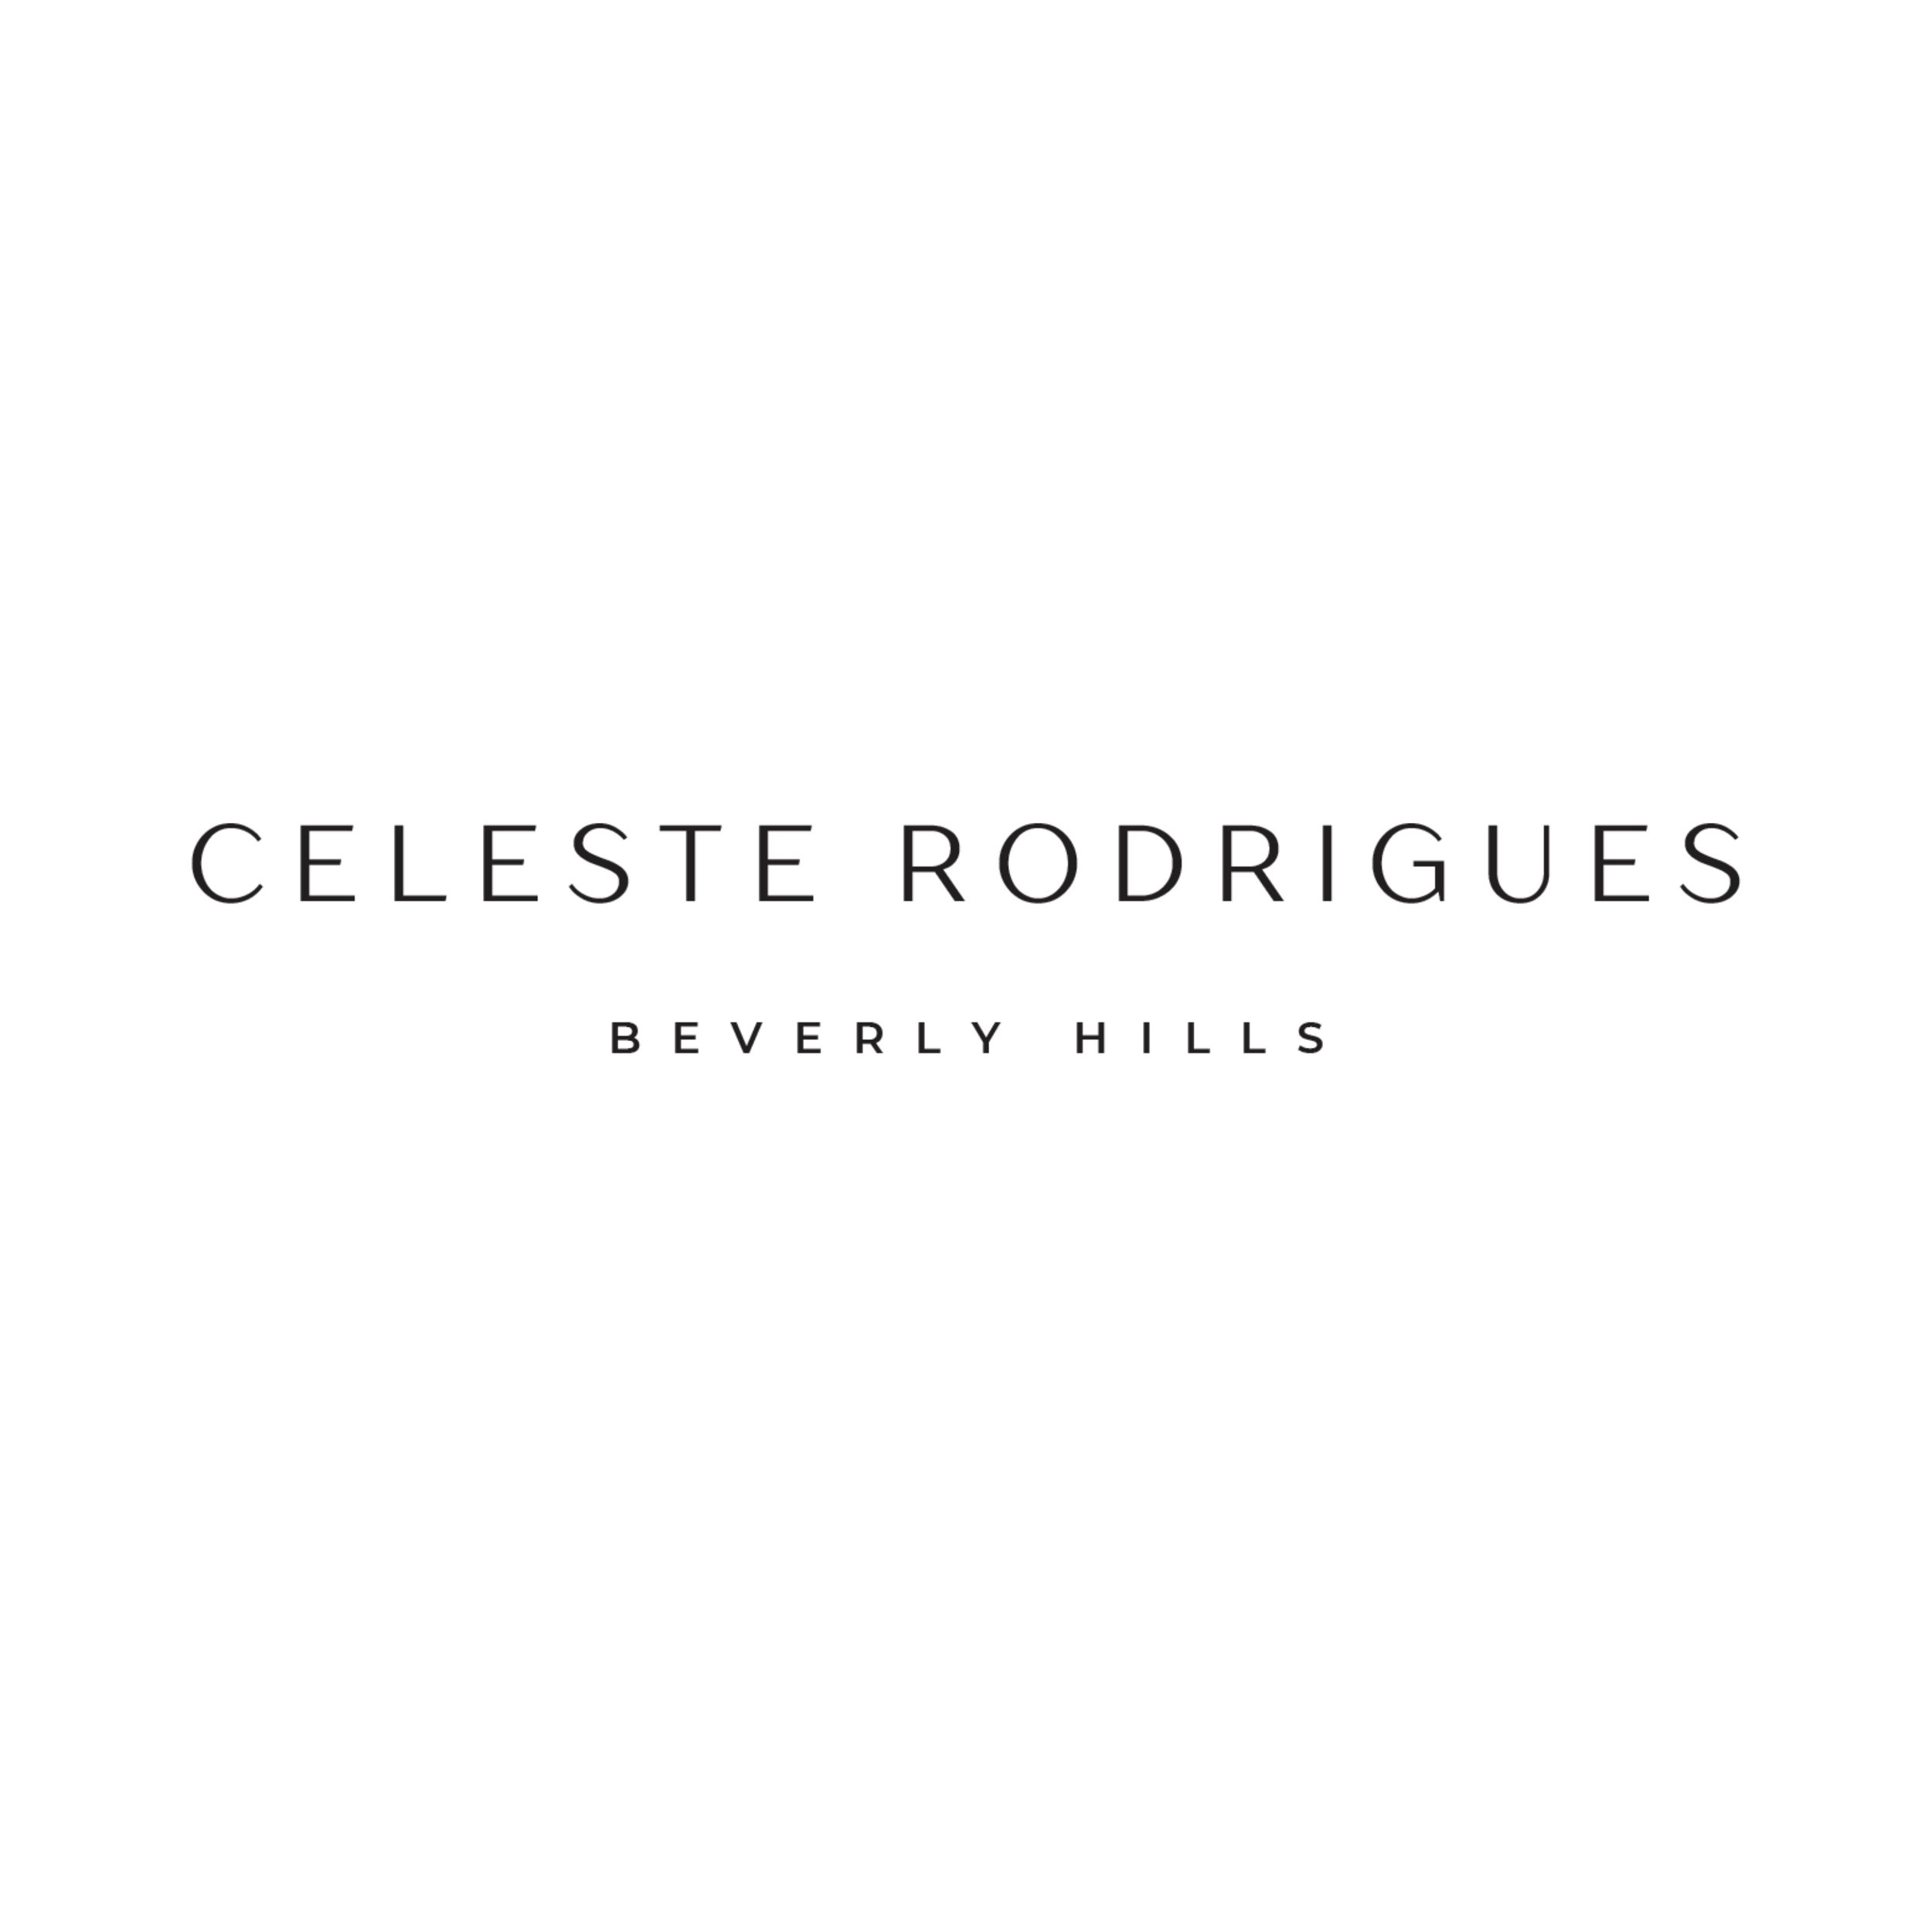 Celeste Rodrigues Beverly Hills